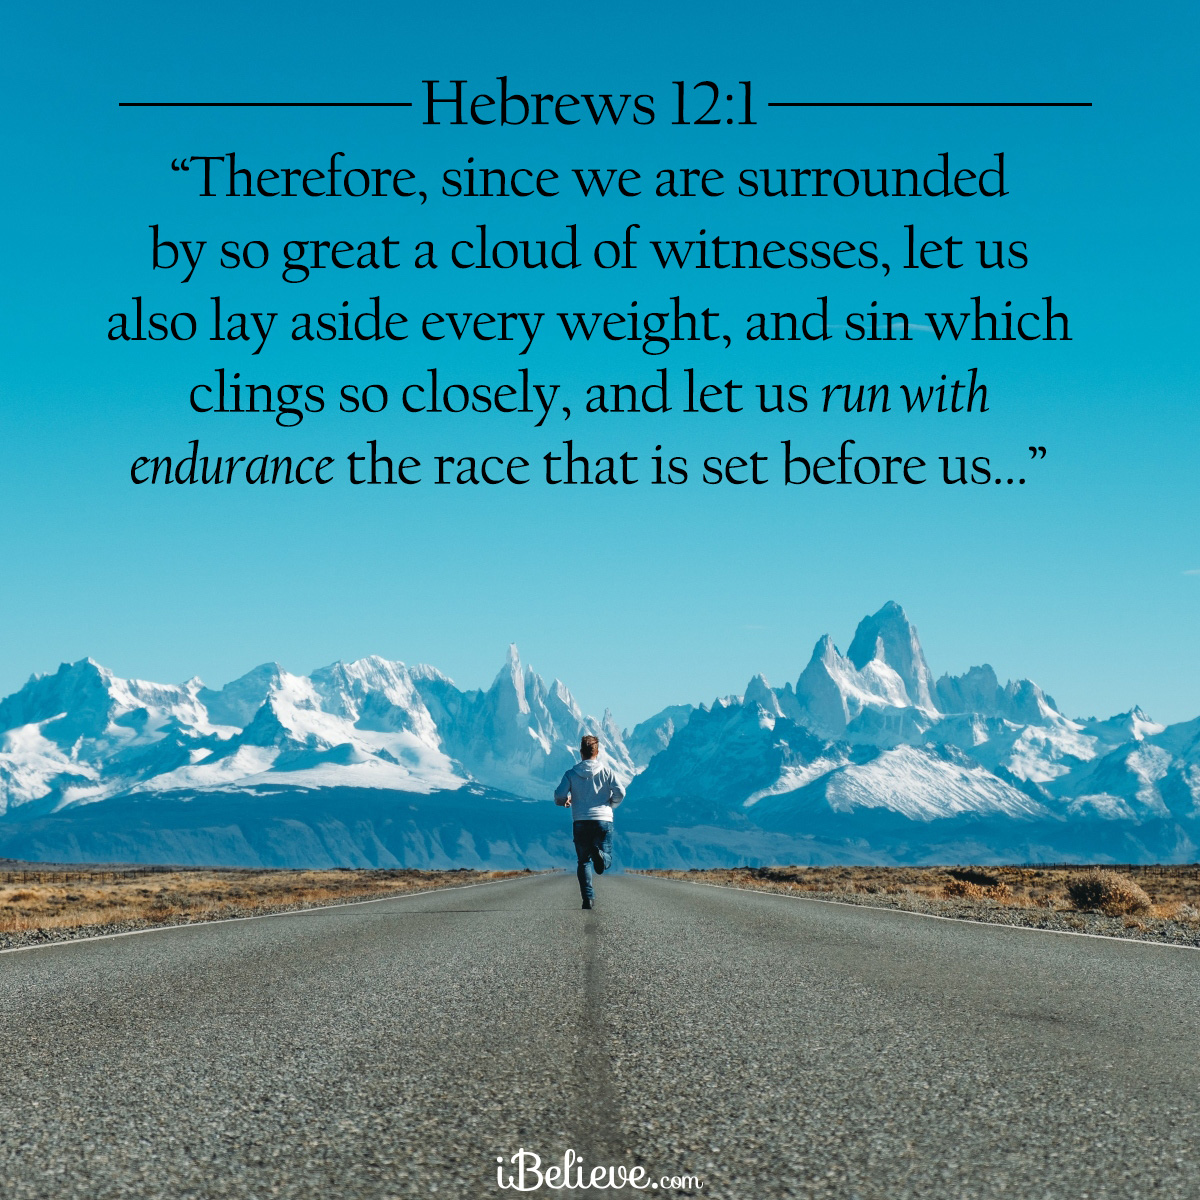 Hebrews 12:1, inspirational image